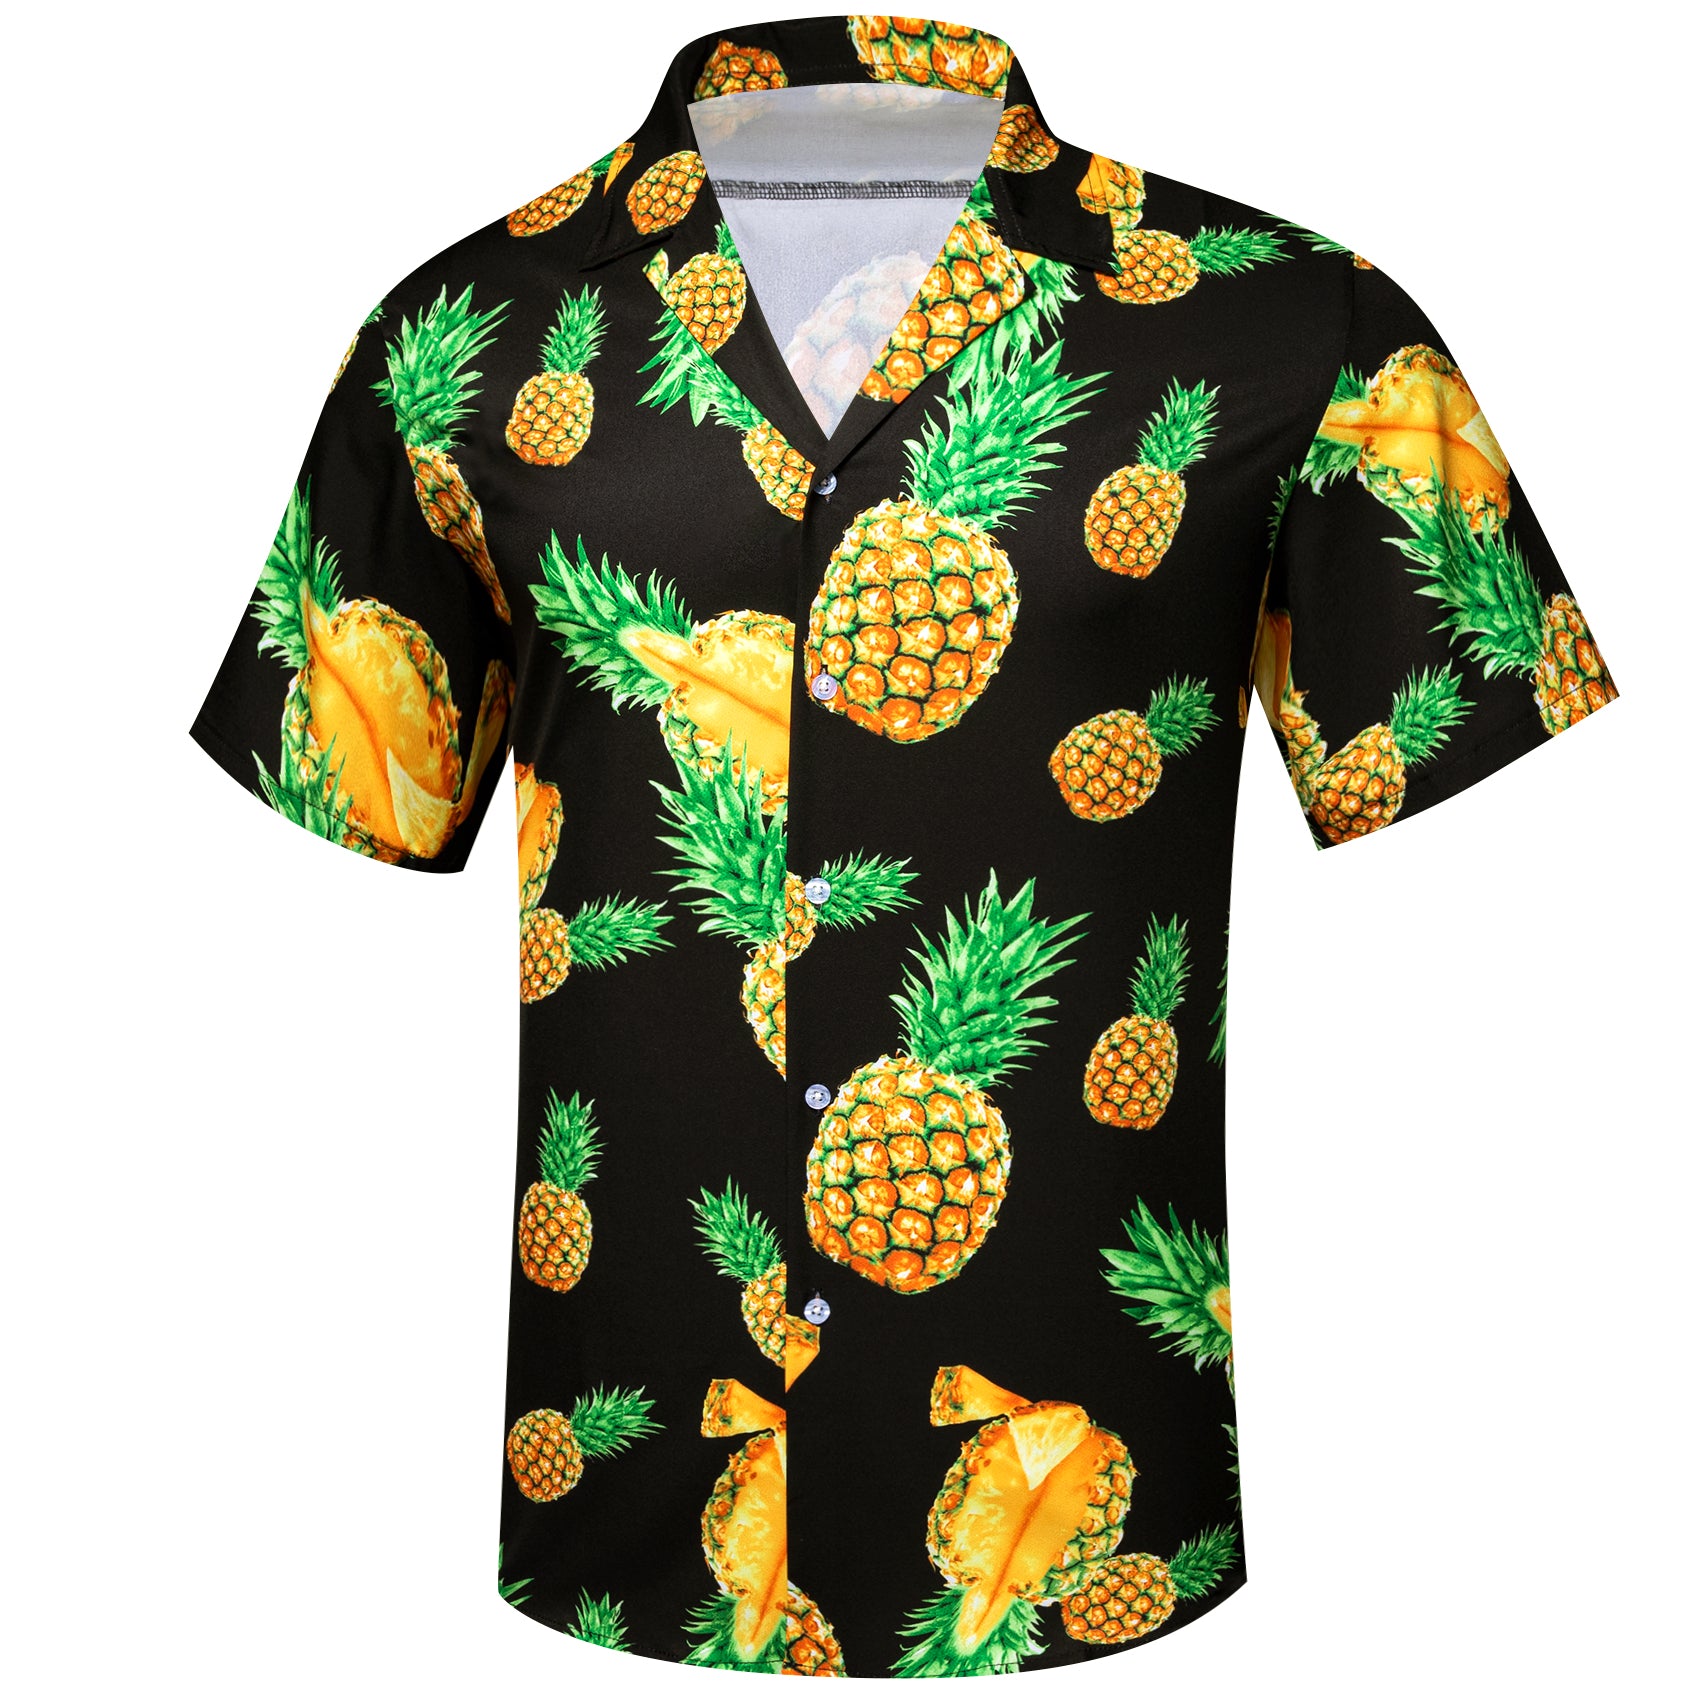 Men's Black Pineapple Floral Pattern Short Sleeves Summer Hawaii Shirt